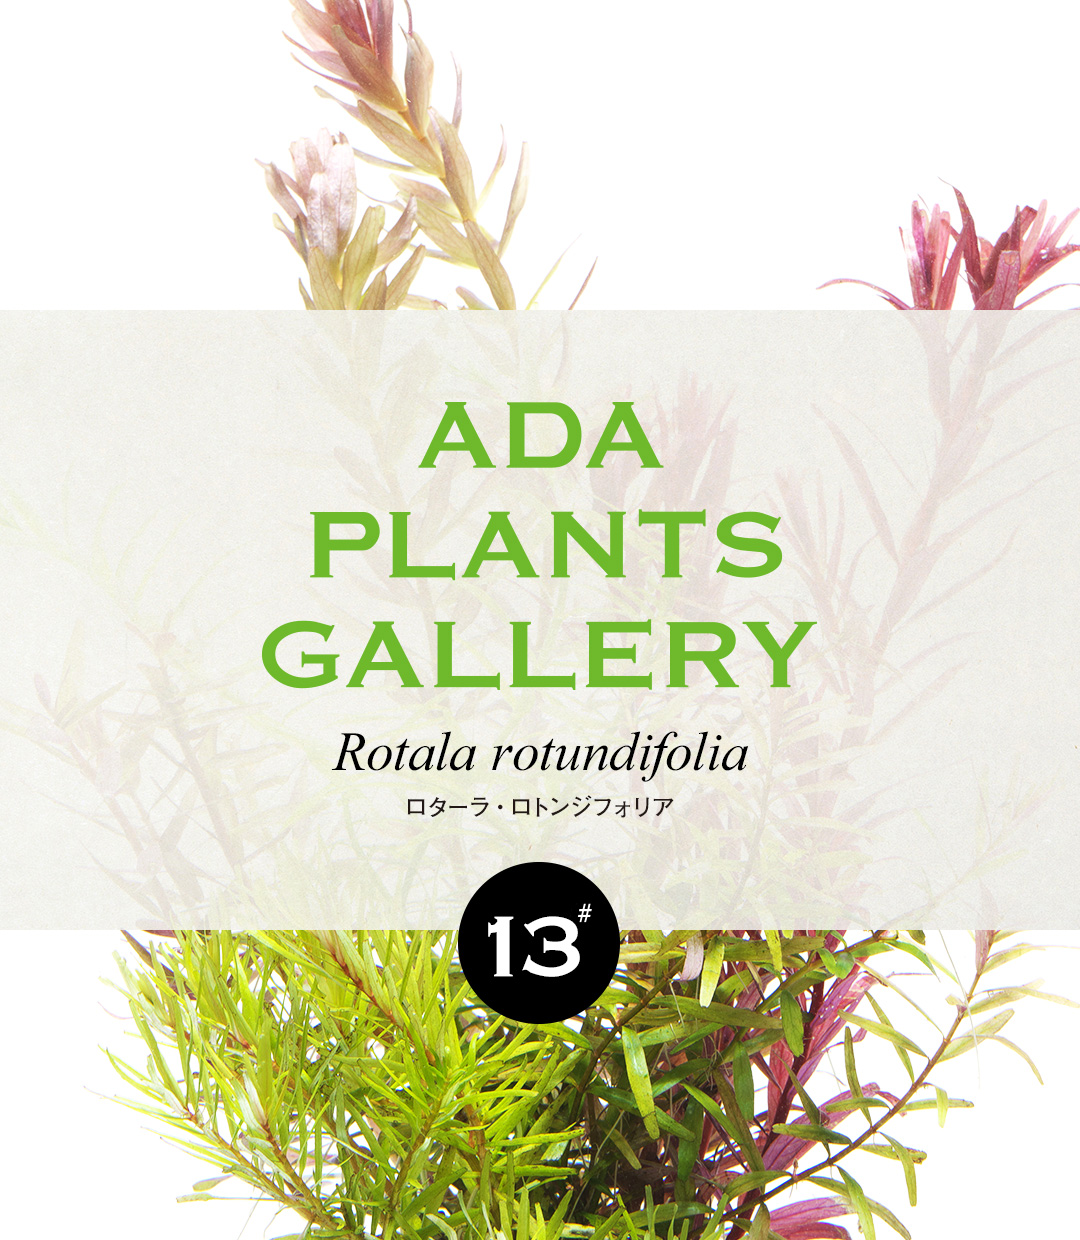 ADA PLANTS GALLERY #13 Rotala rotundifolia